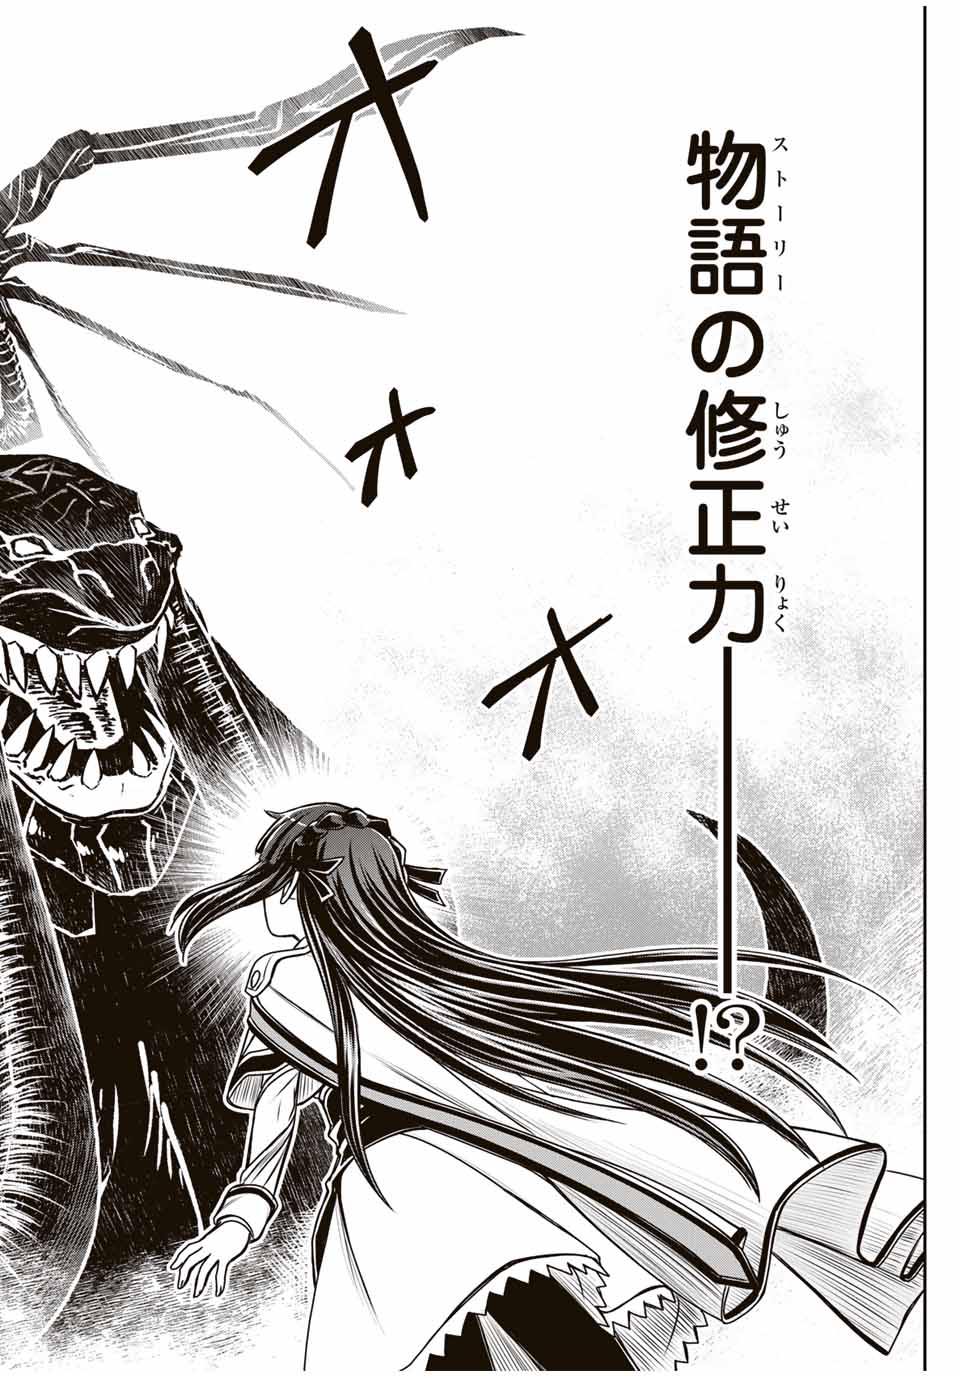 Nengan no Akuyaku Reijou (Last Boss) no Karada wo Teniiretazo!  - Chapter 22 - Page 20